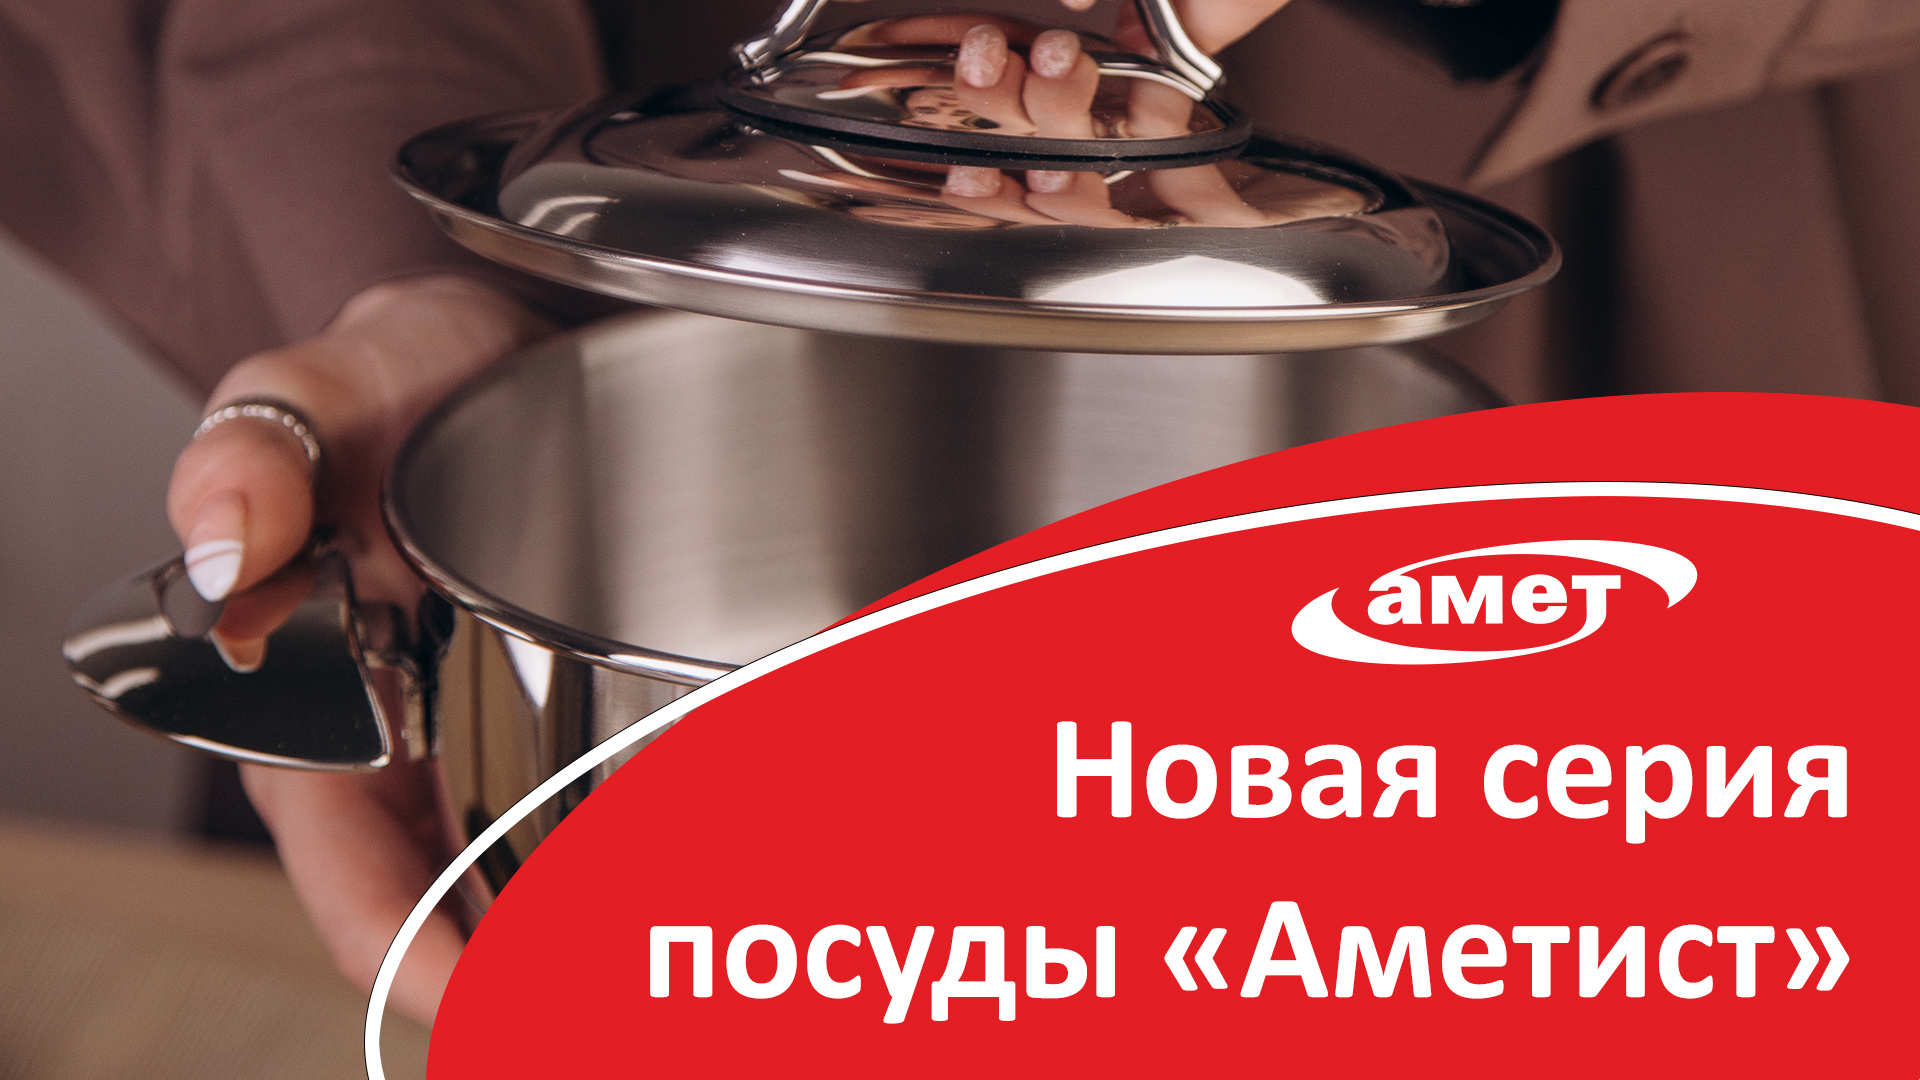 АМЕТ // Новая серия посуды «Аметист»